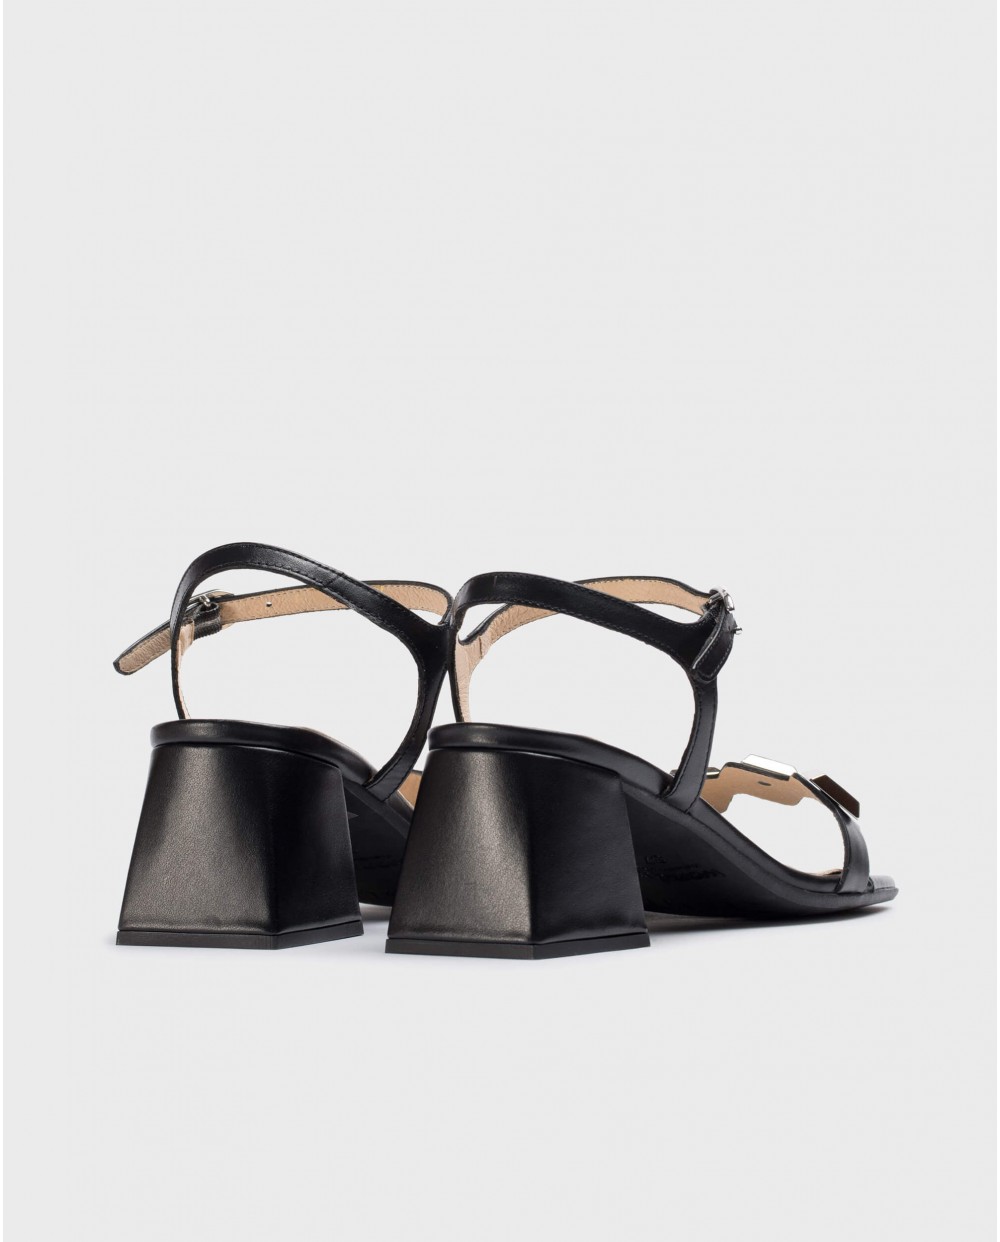 Black Marie heeled sandals